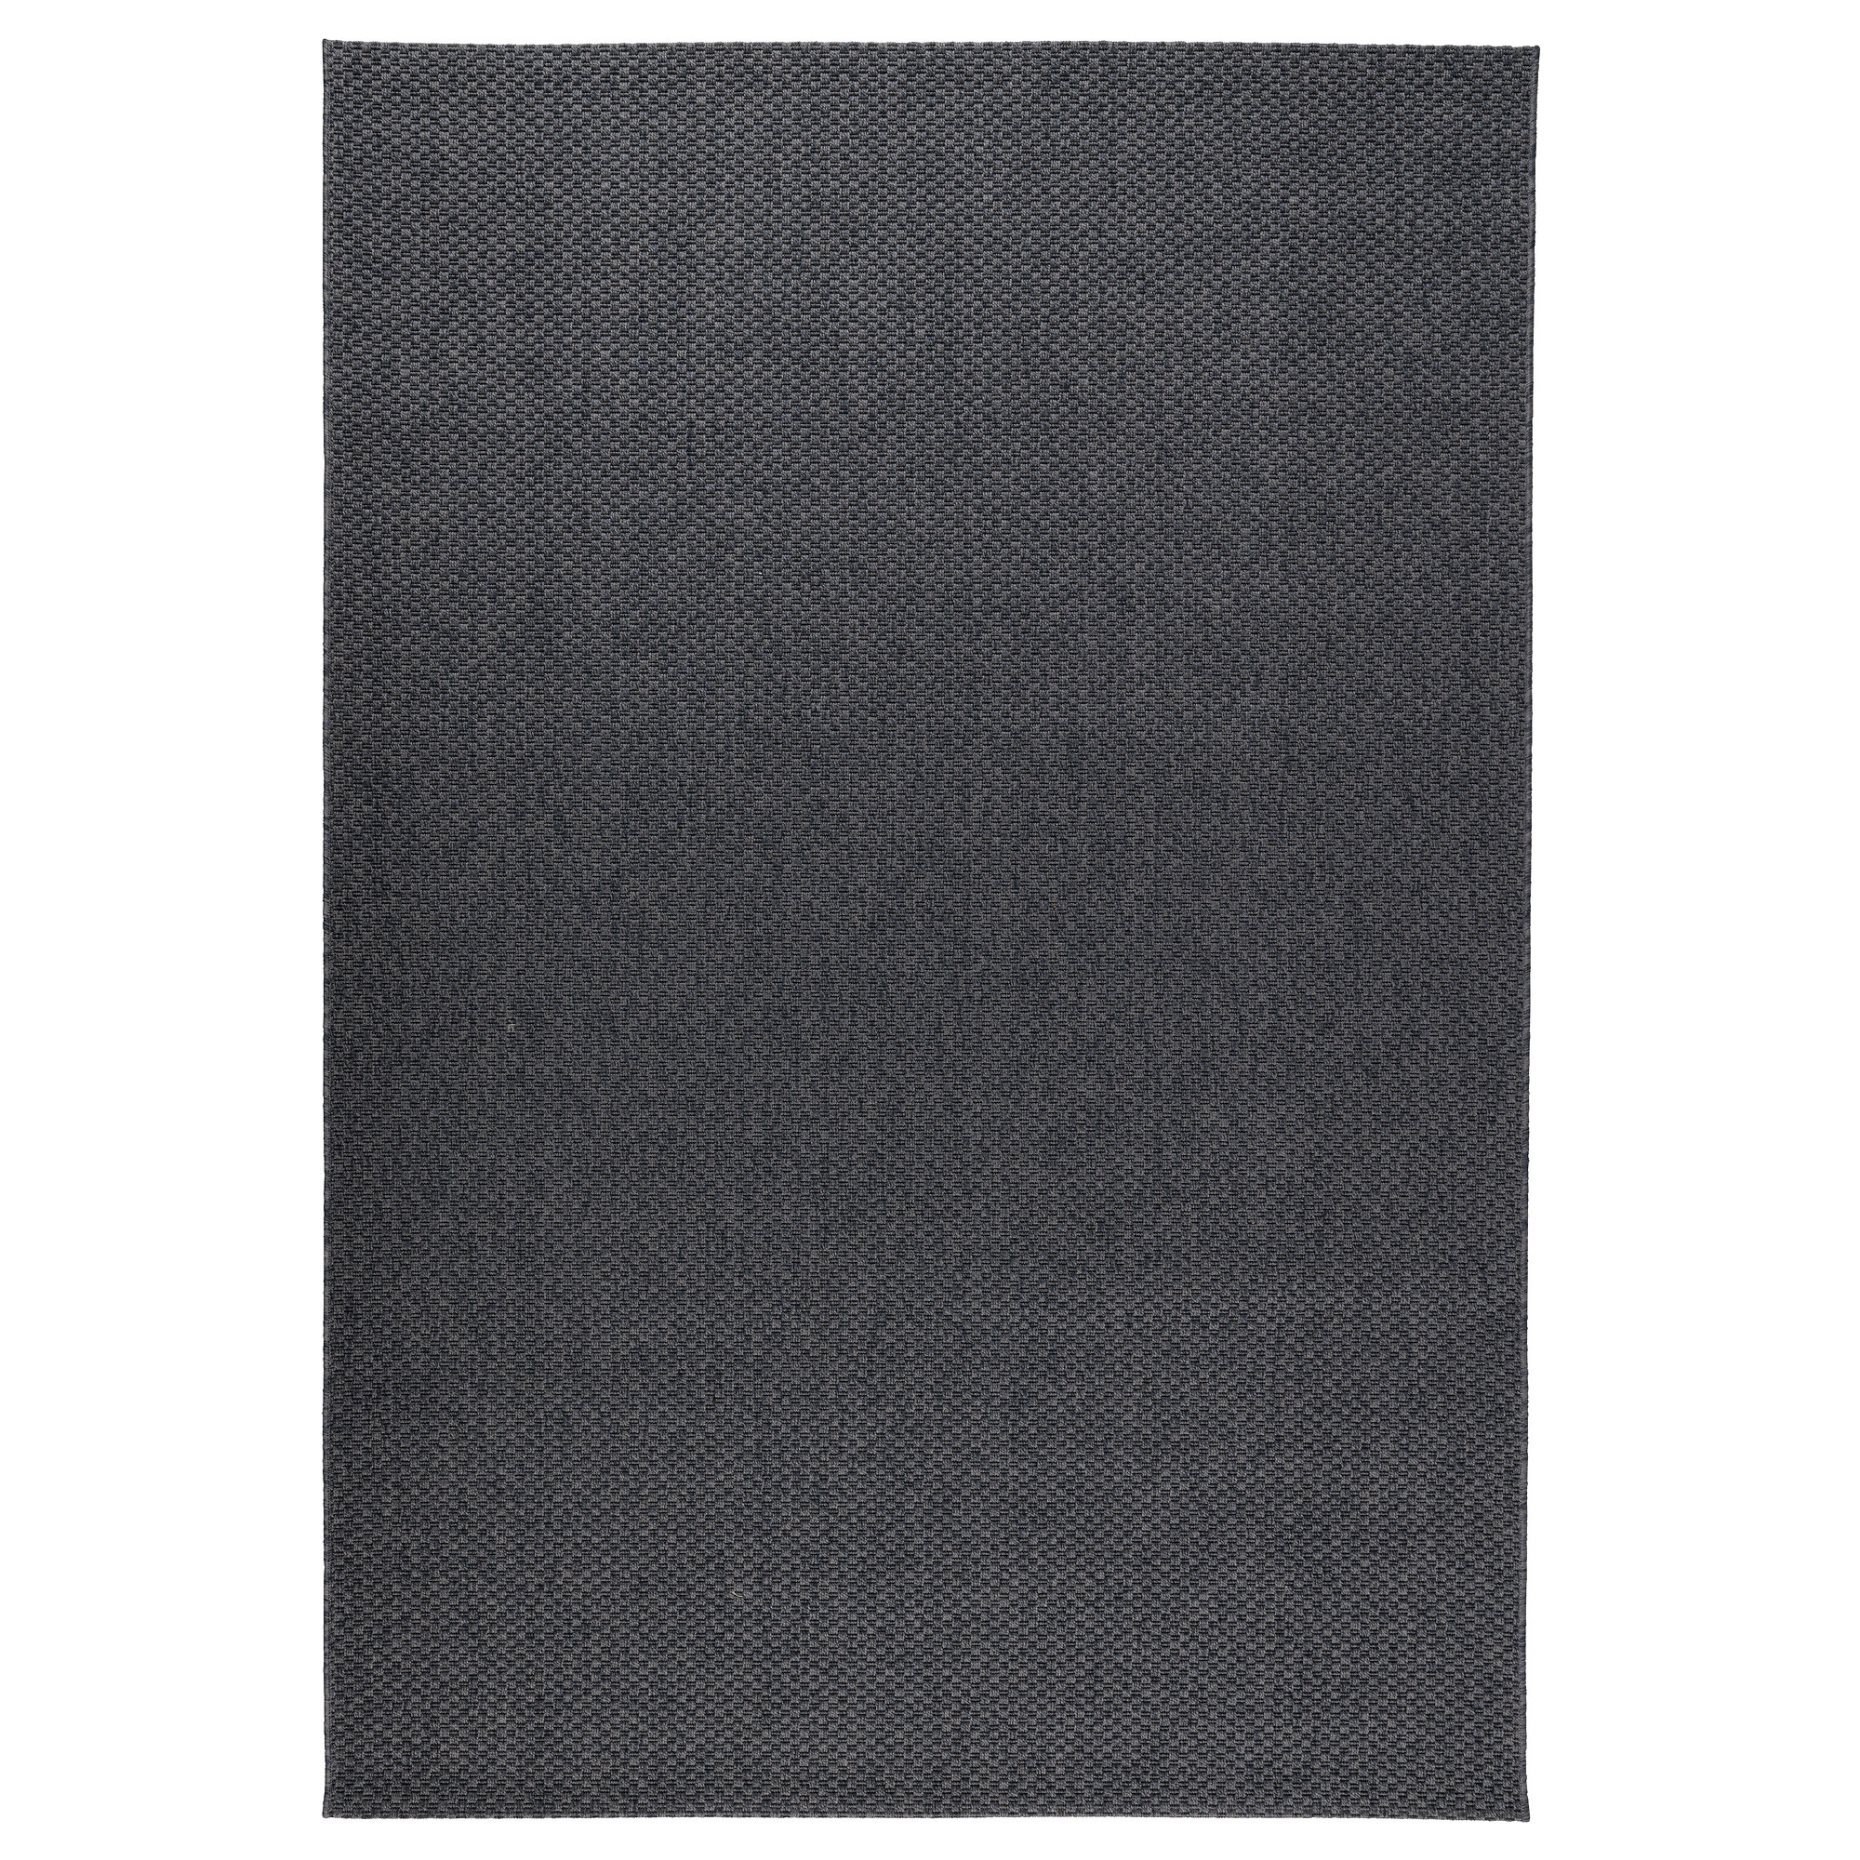 MORUM, χαλί χαμηλή πλέξη εσωτερικού/εξωτερικού χώρου, 200x300 cm, 301.982.93